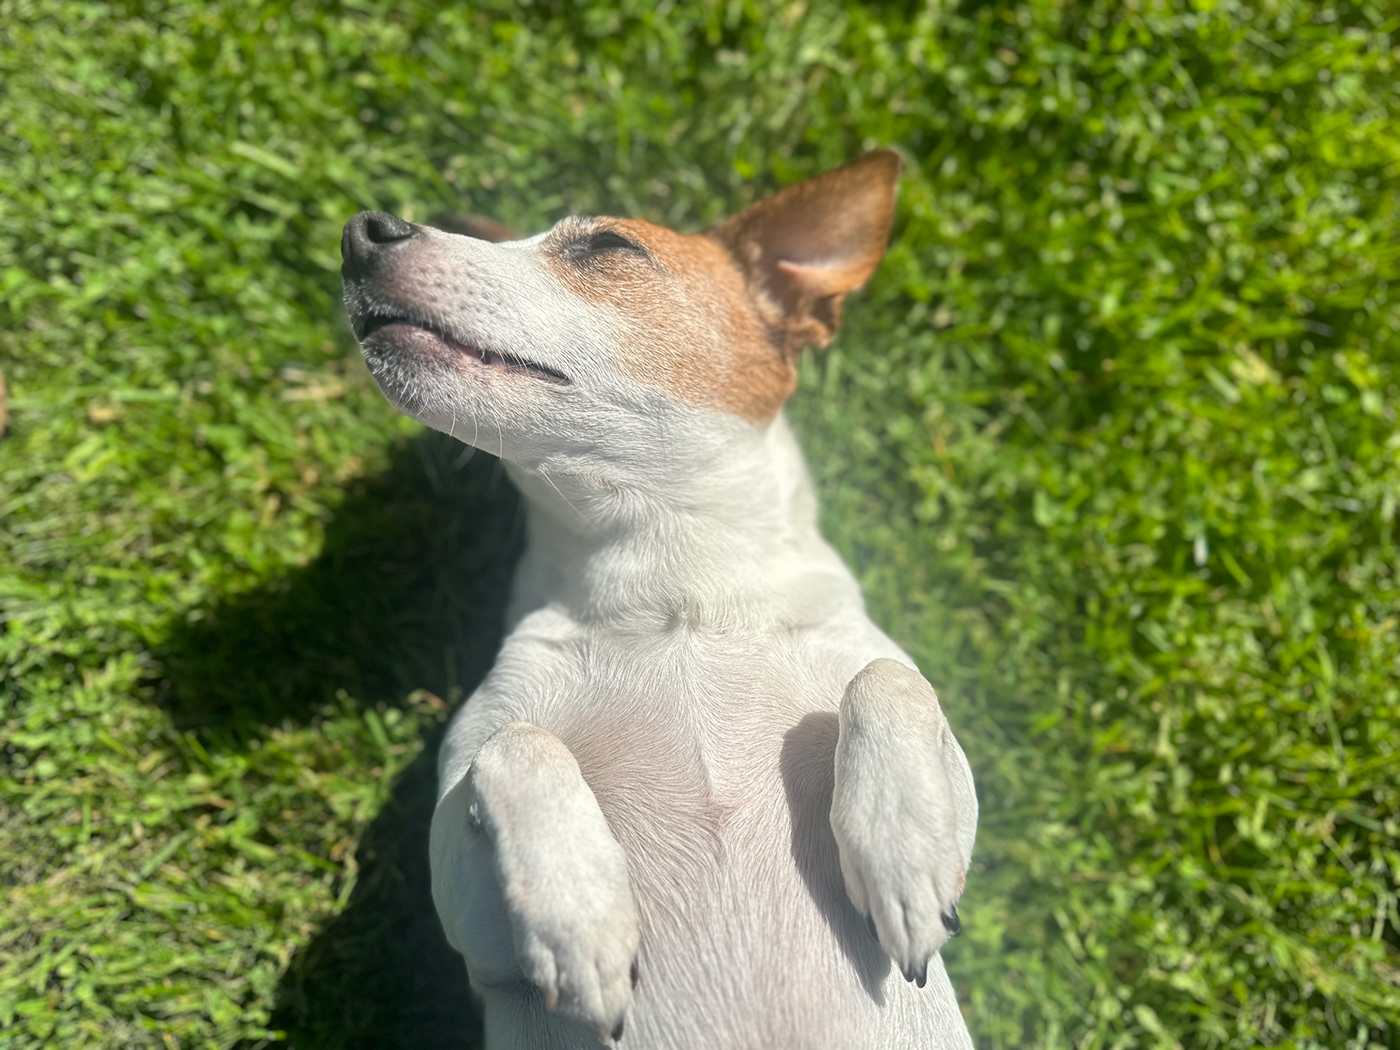 animals dogs pets Pet Portrait outside sunshine cute Fun